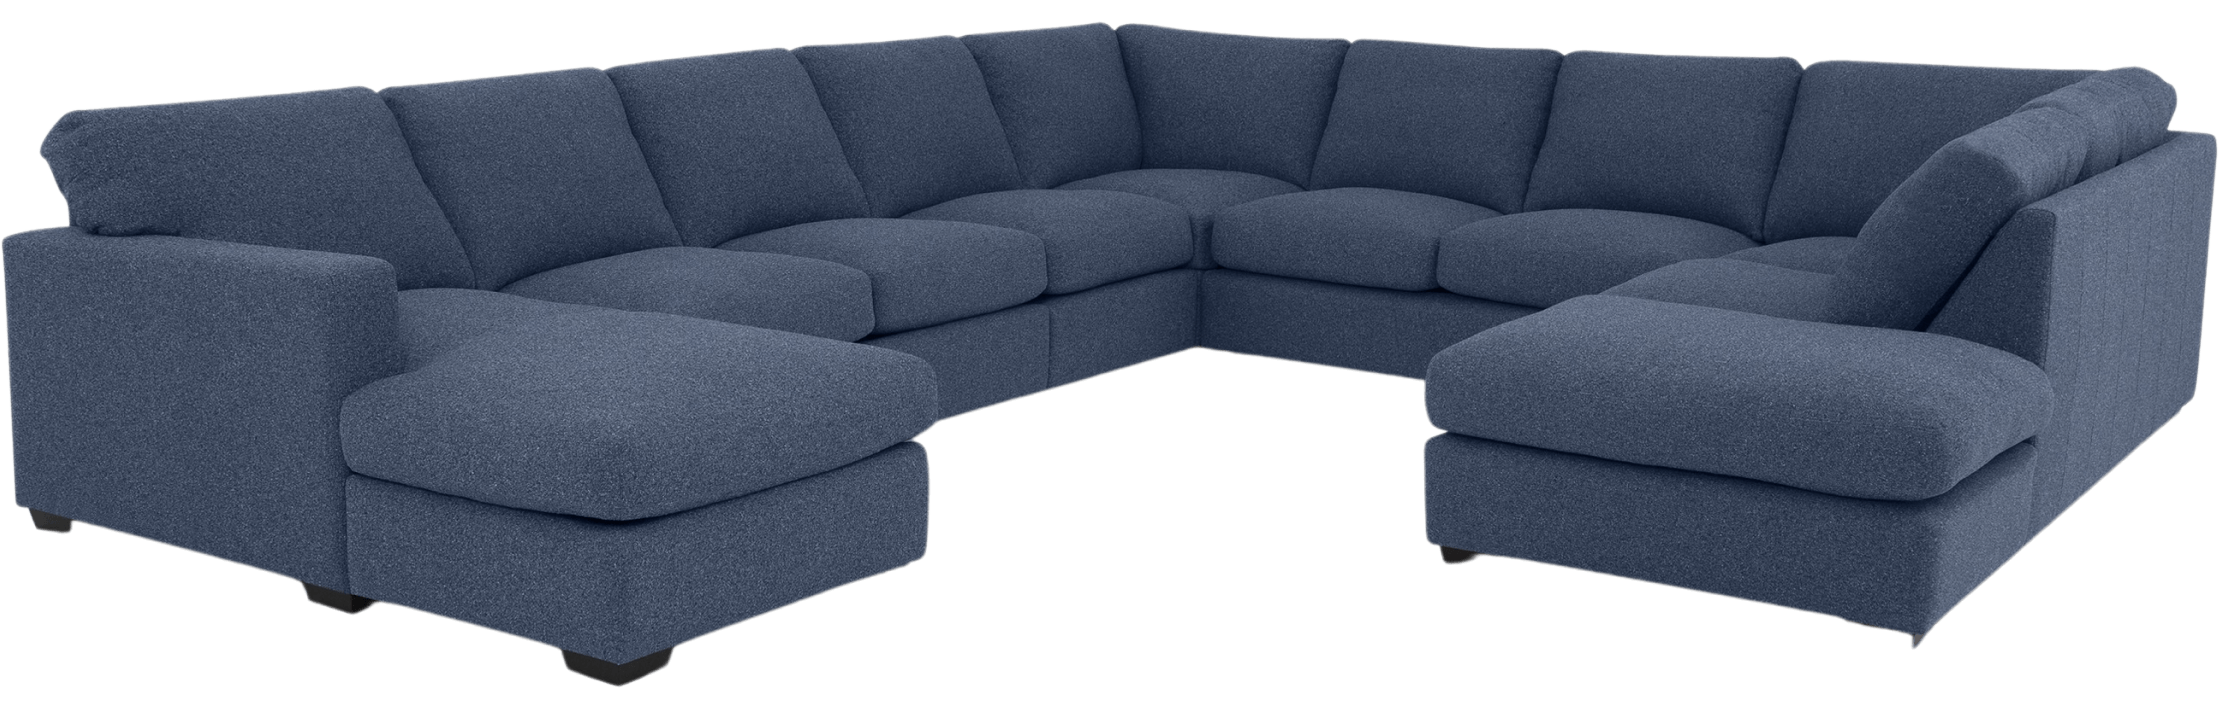 U-shaped-sectional sofas-new